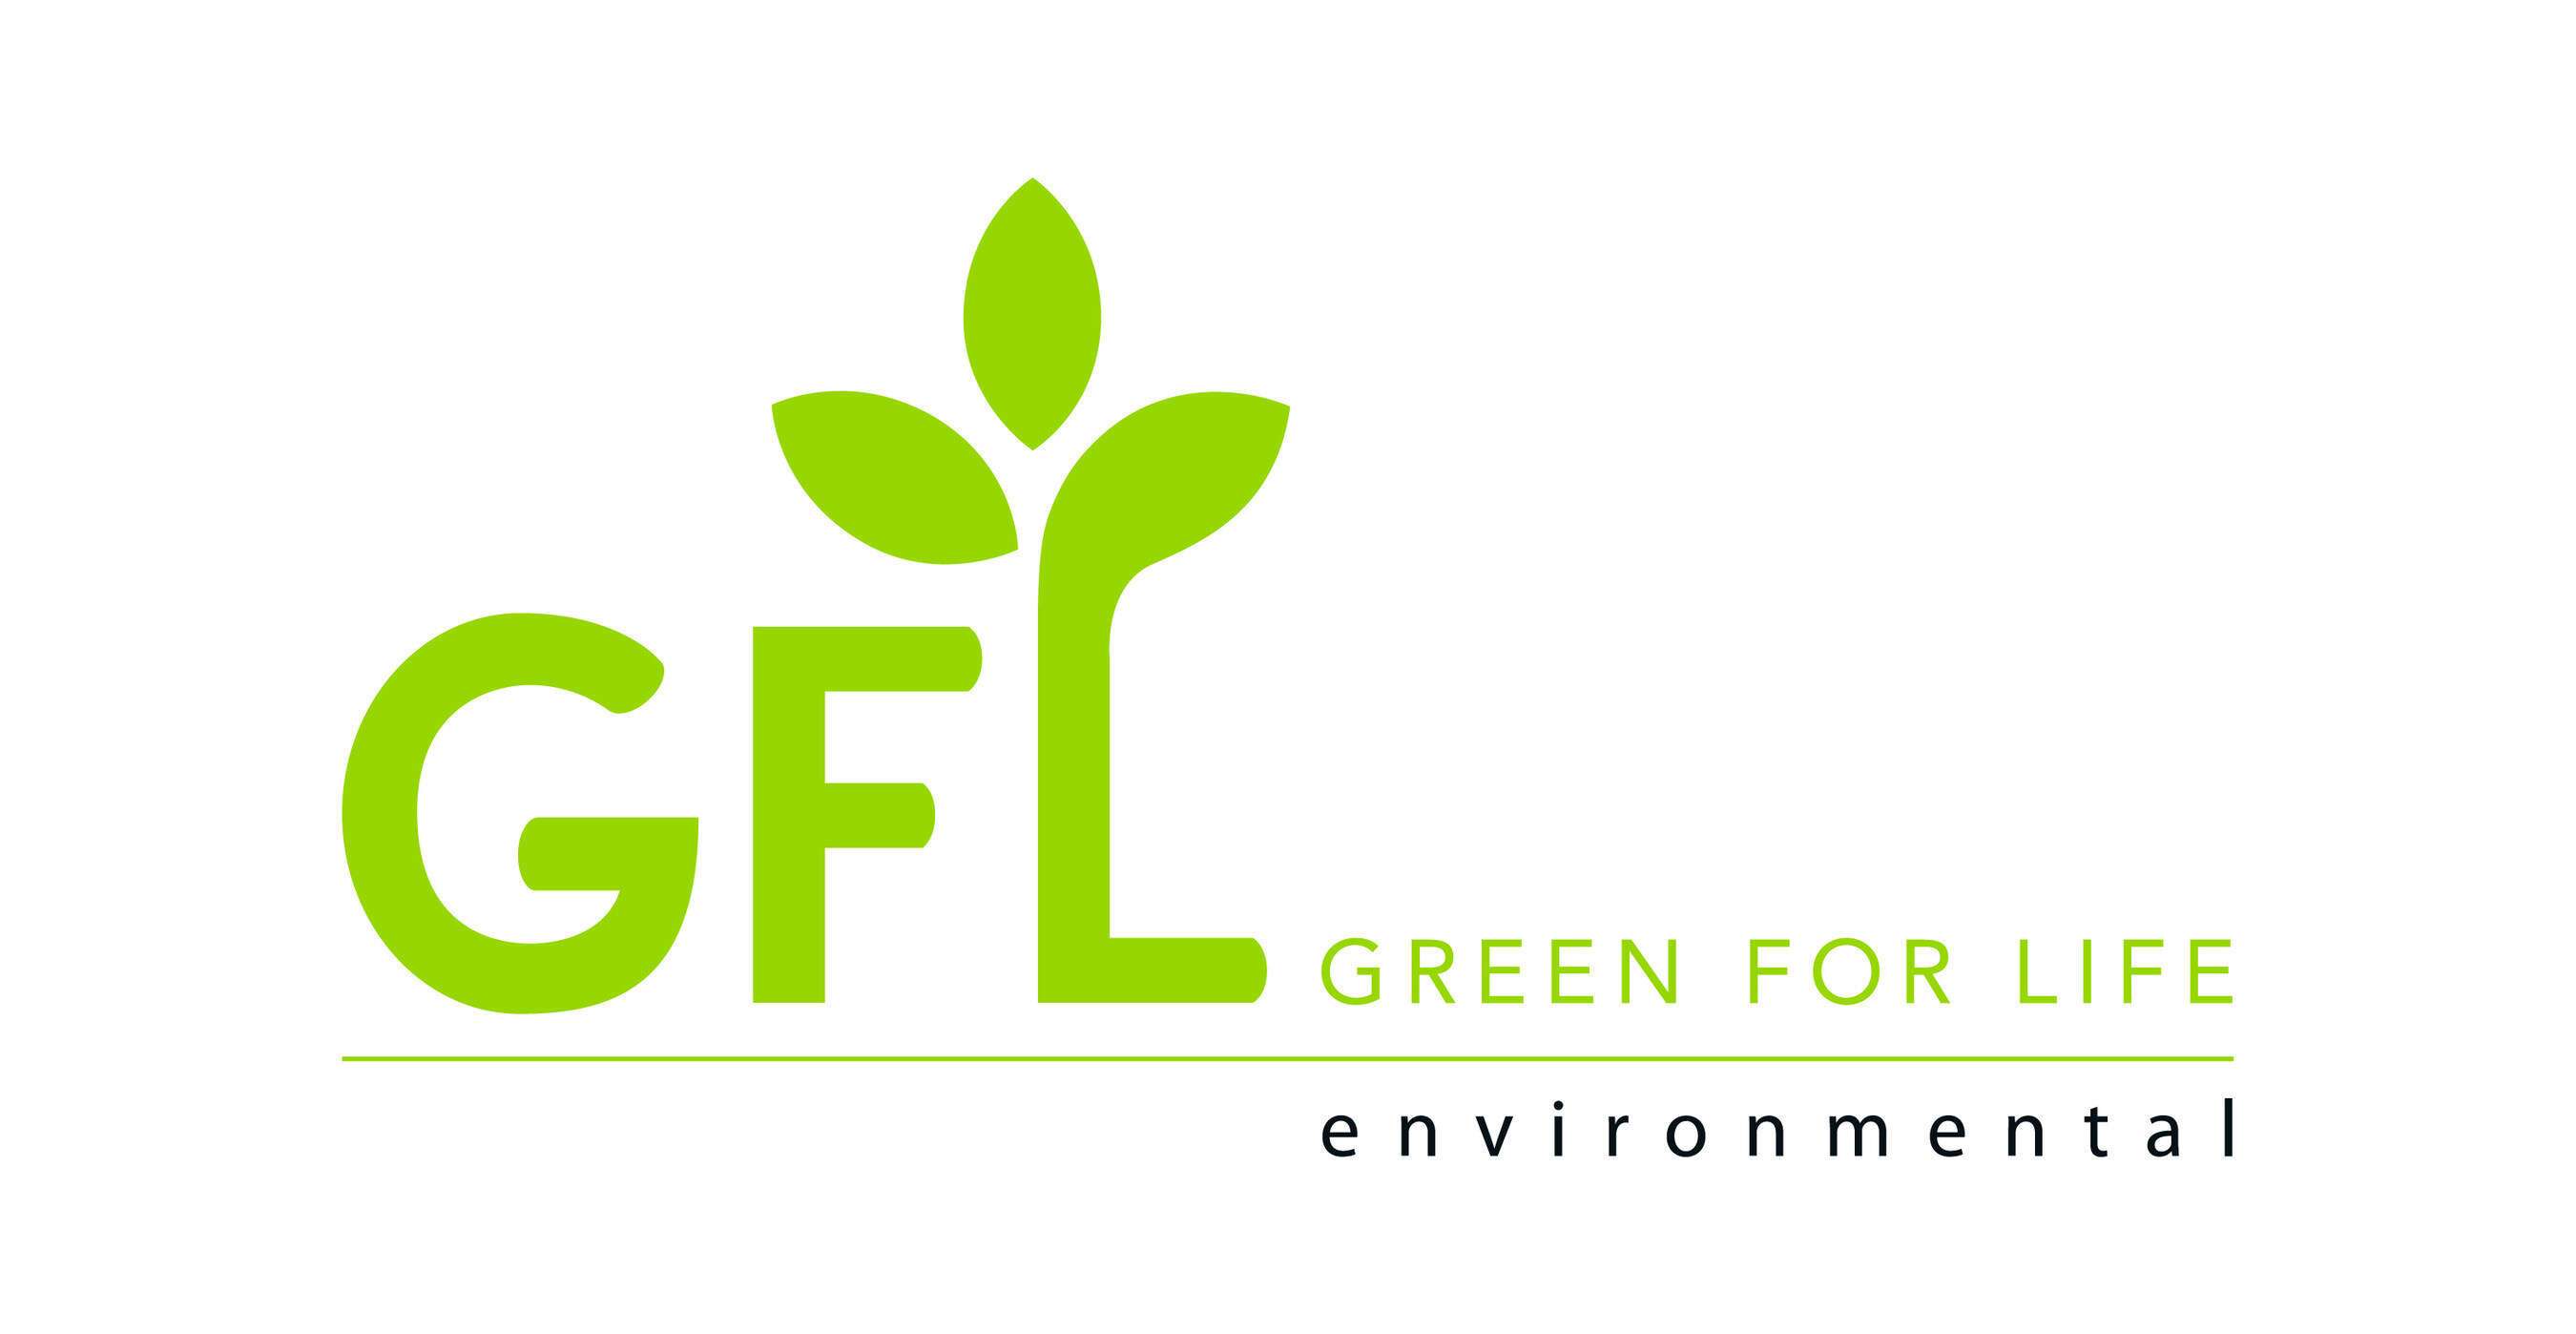 Green for Life Environmental